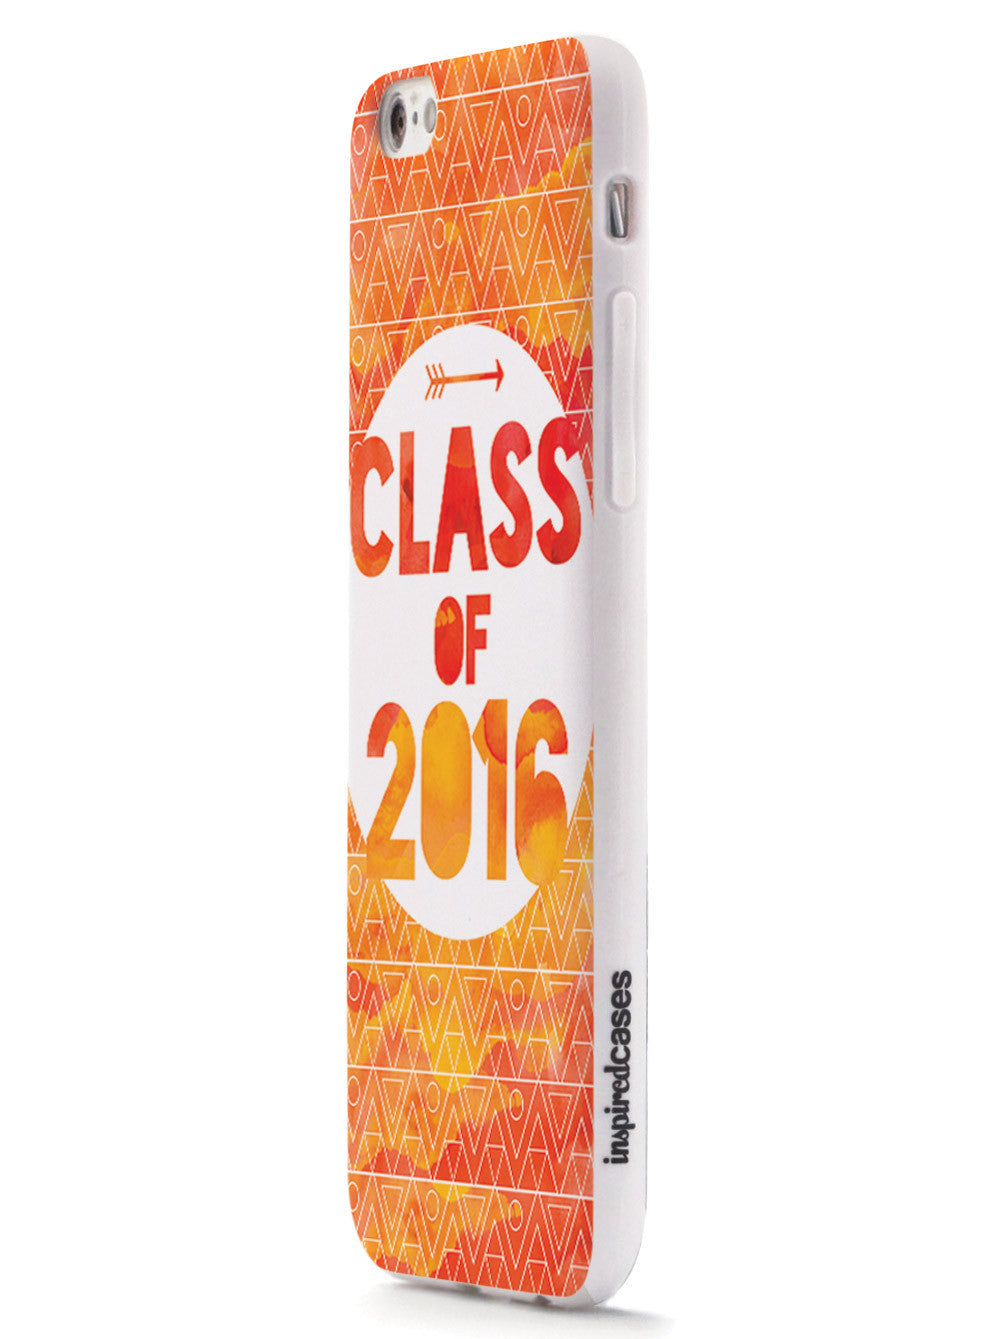 Class of 2016 - Orange Watercolor Case